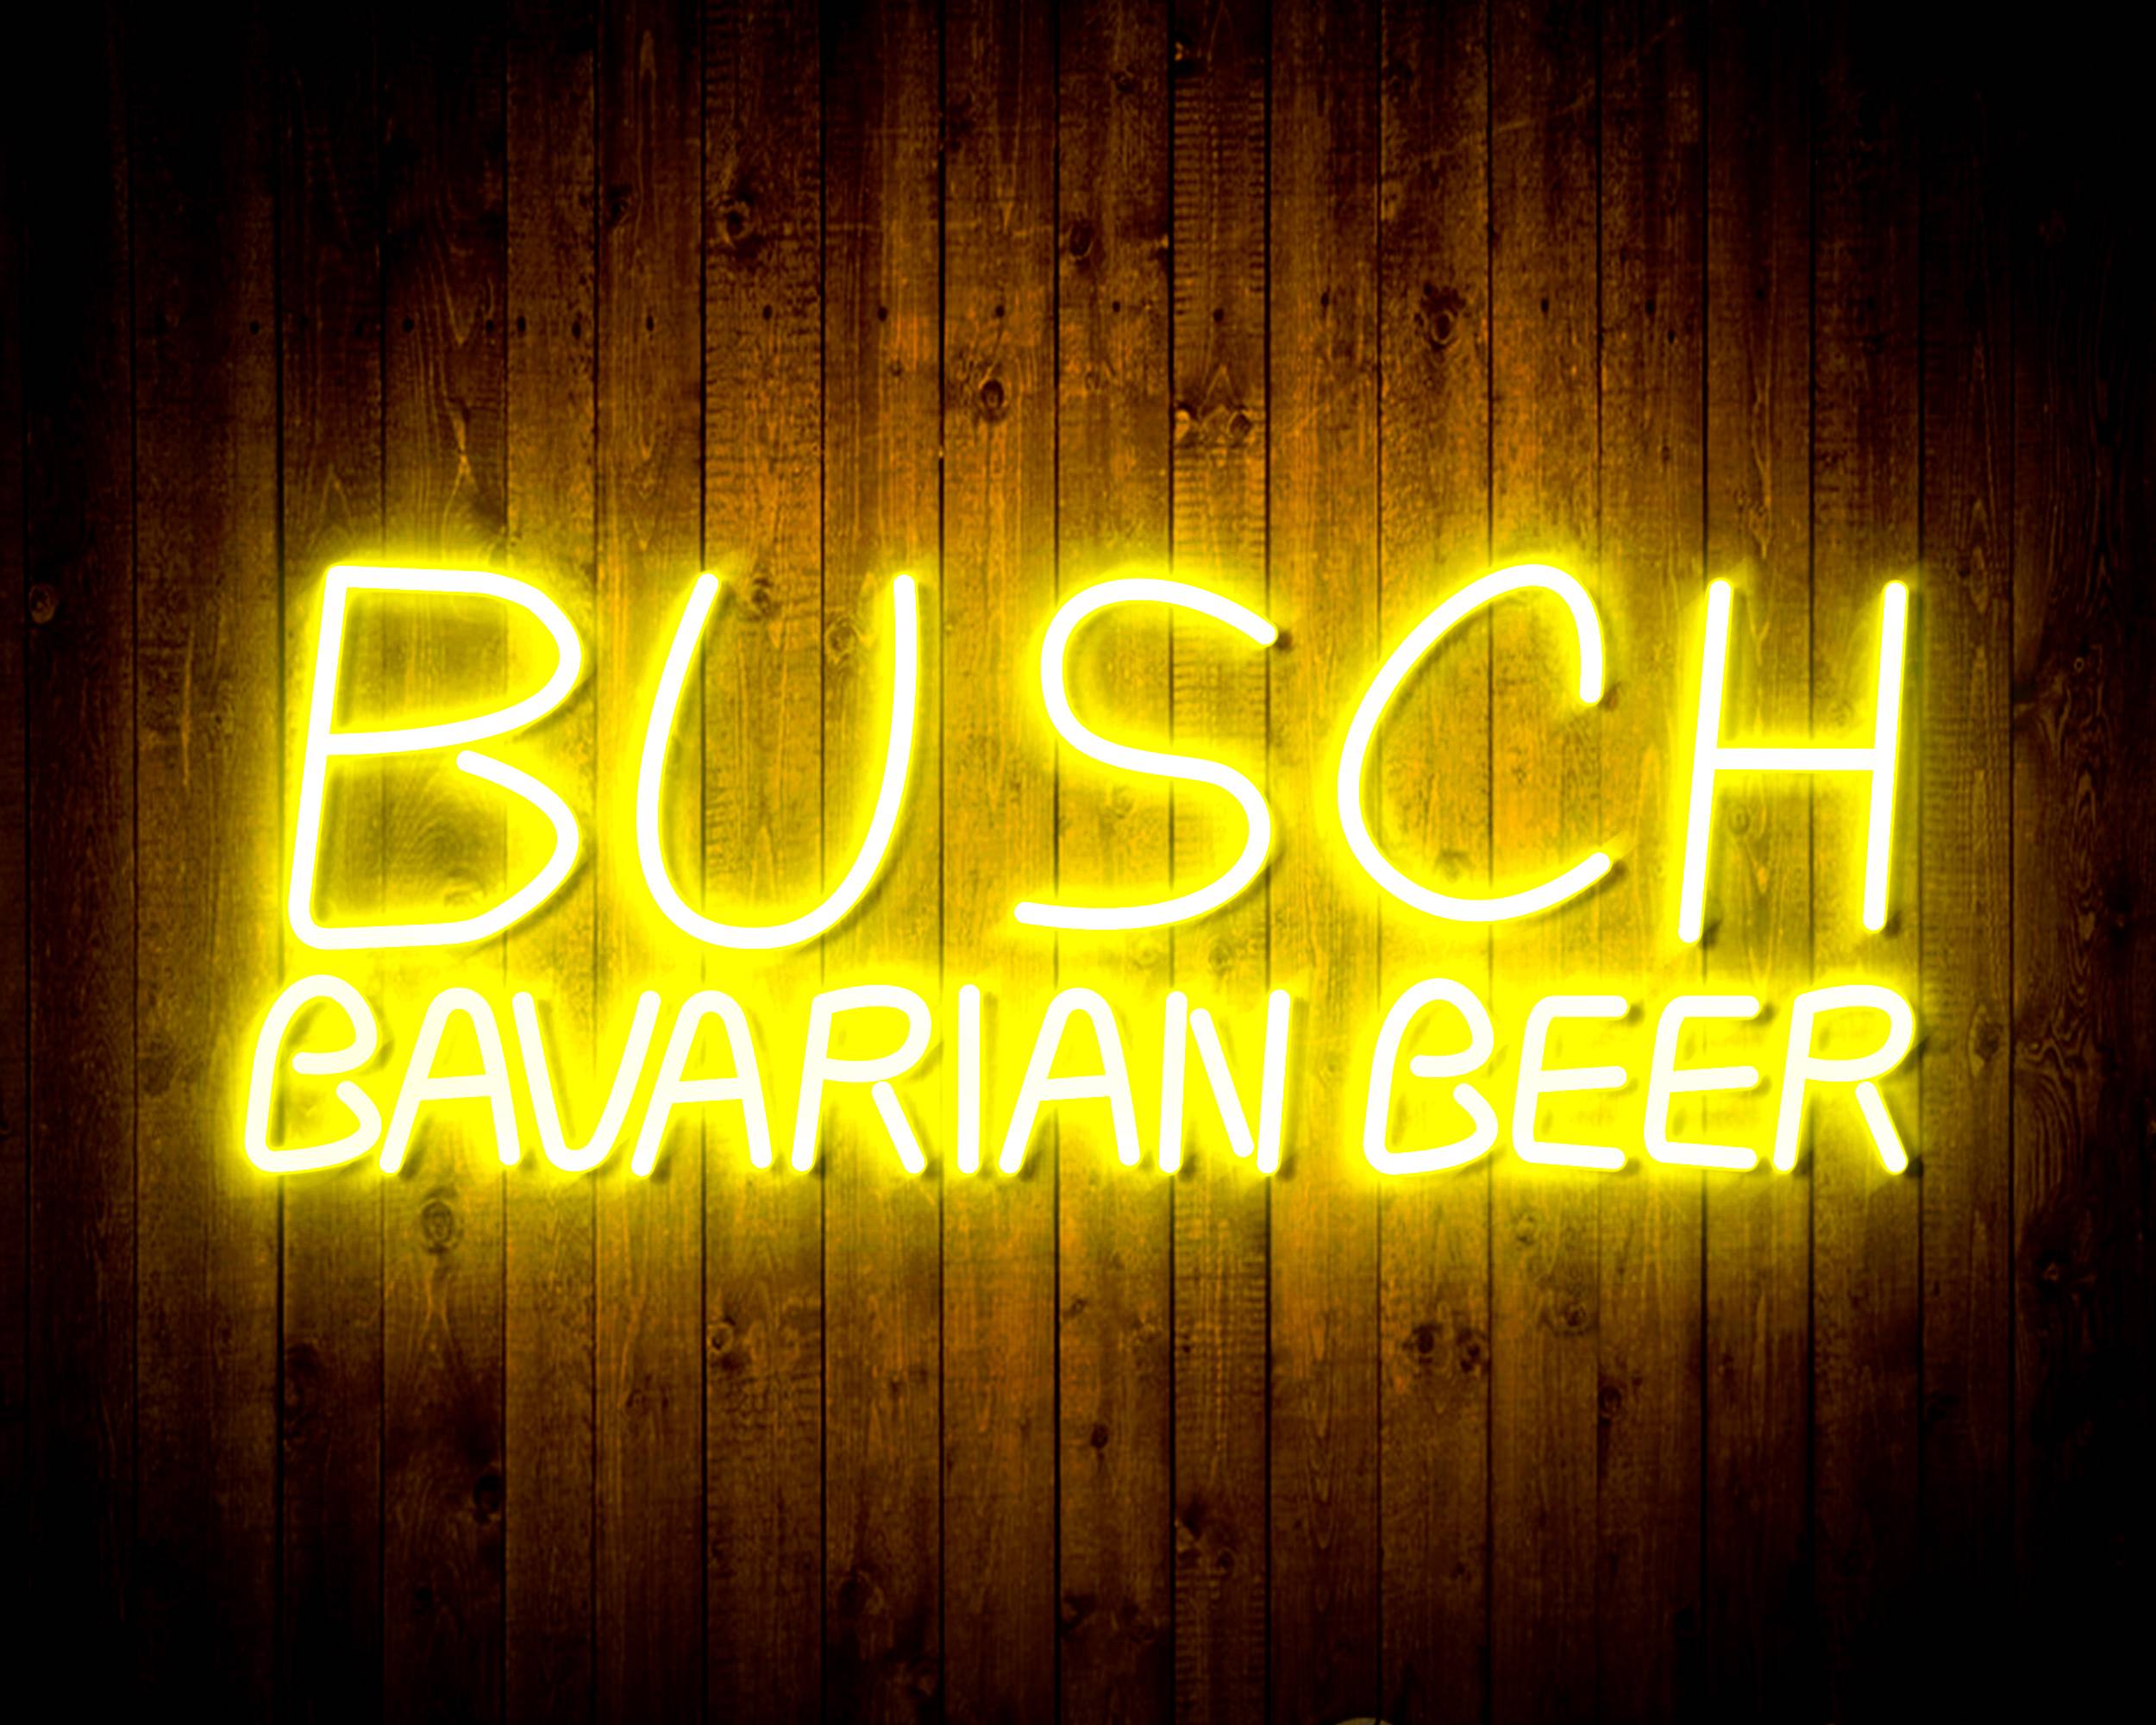 Busch Bavarian Beer Handmade LED Neon Light Sign